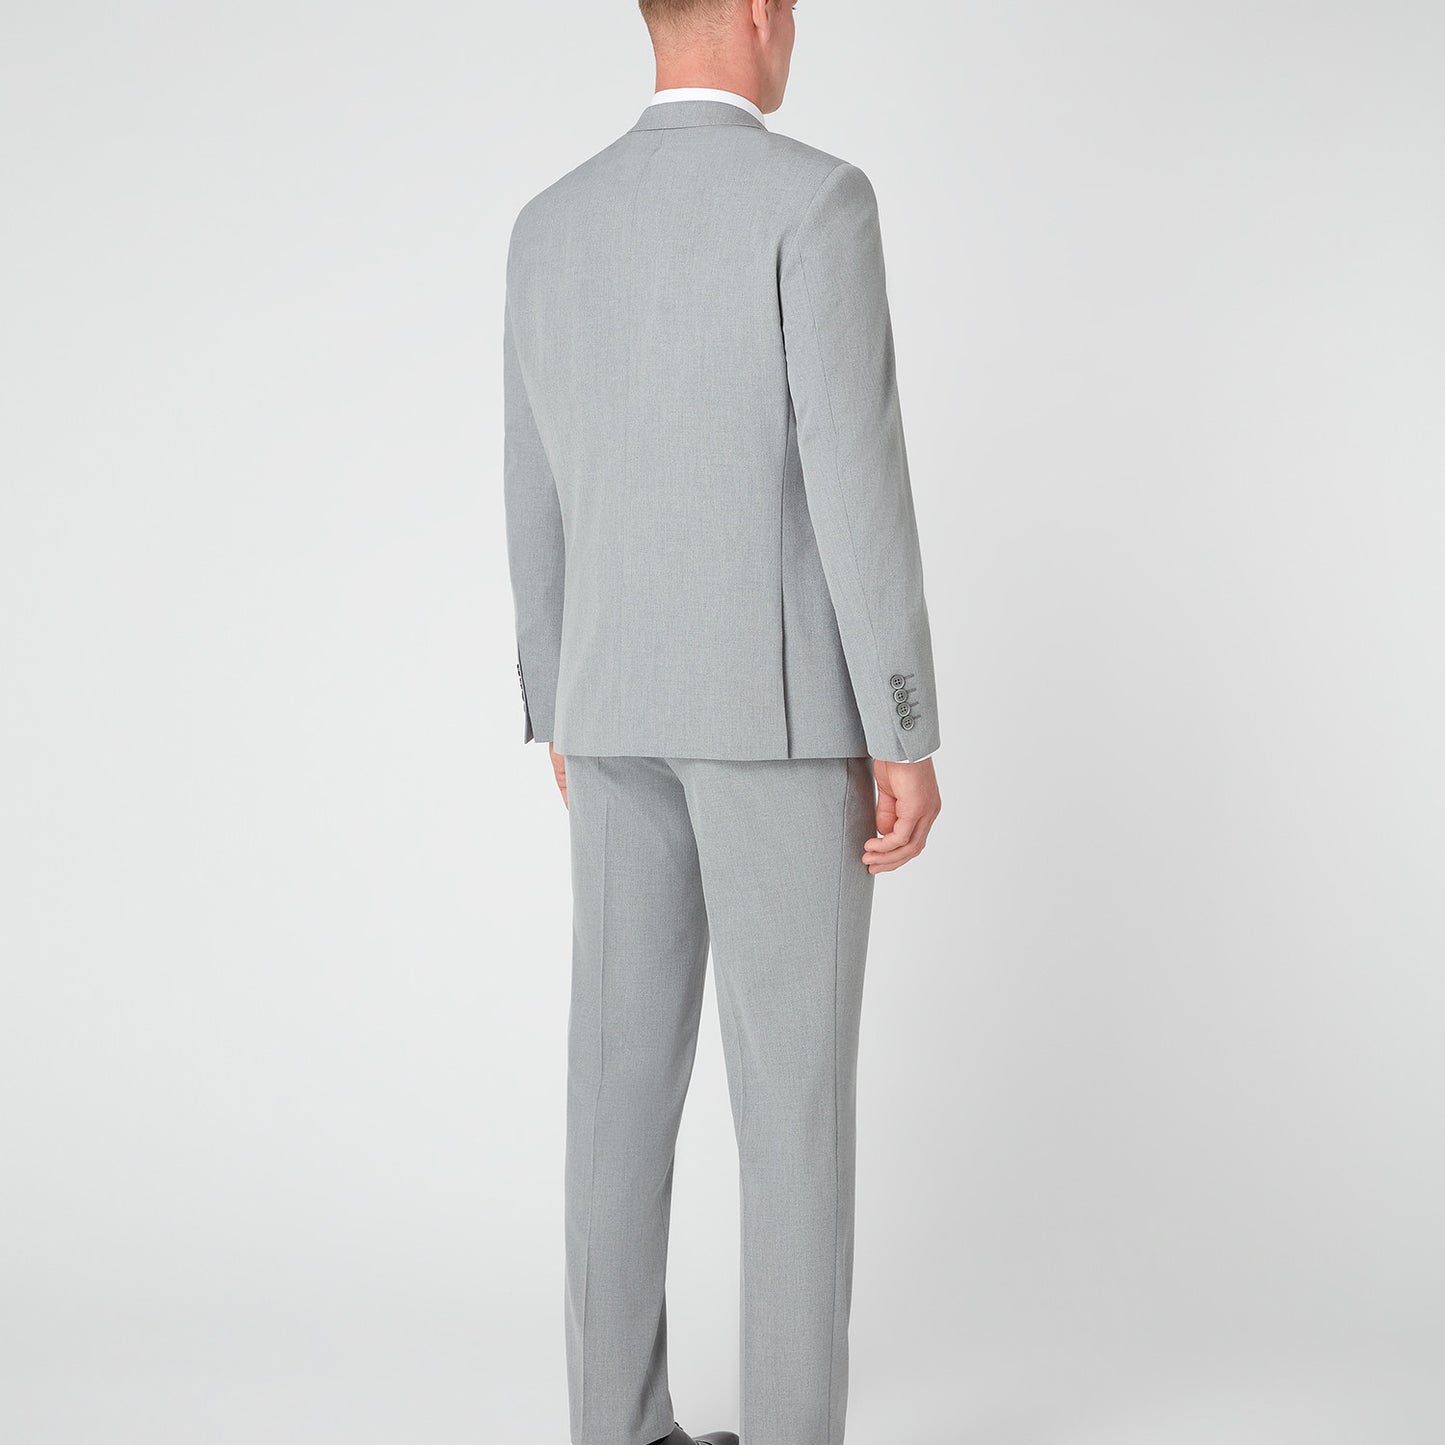 Remus Uomo 11770 05 Light Grey Tapered Suit Jacket